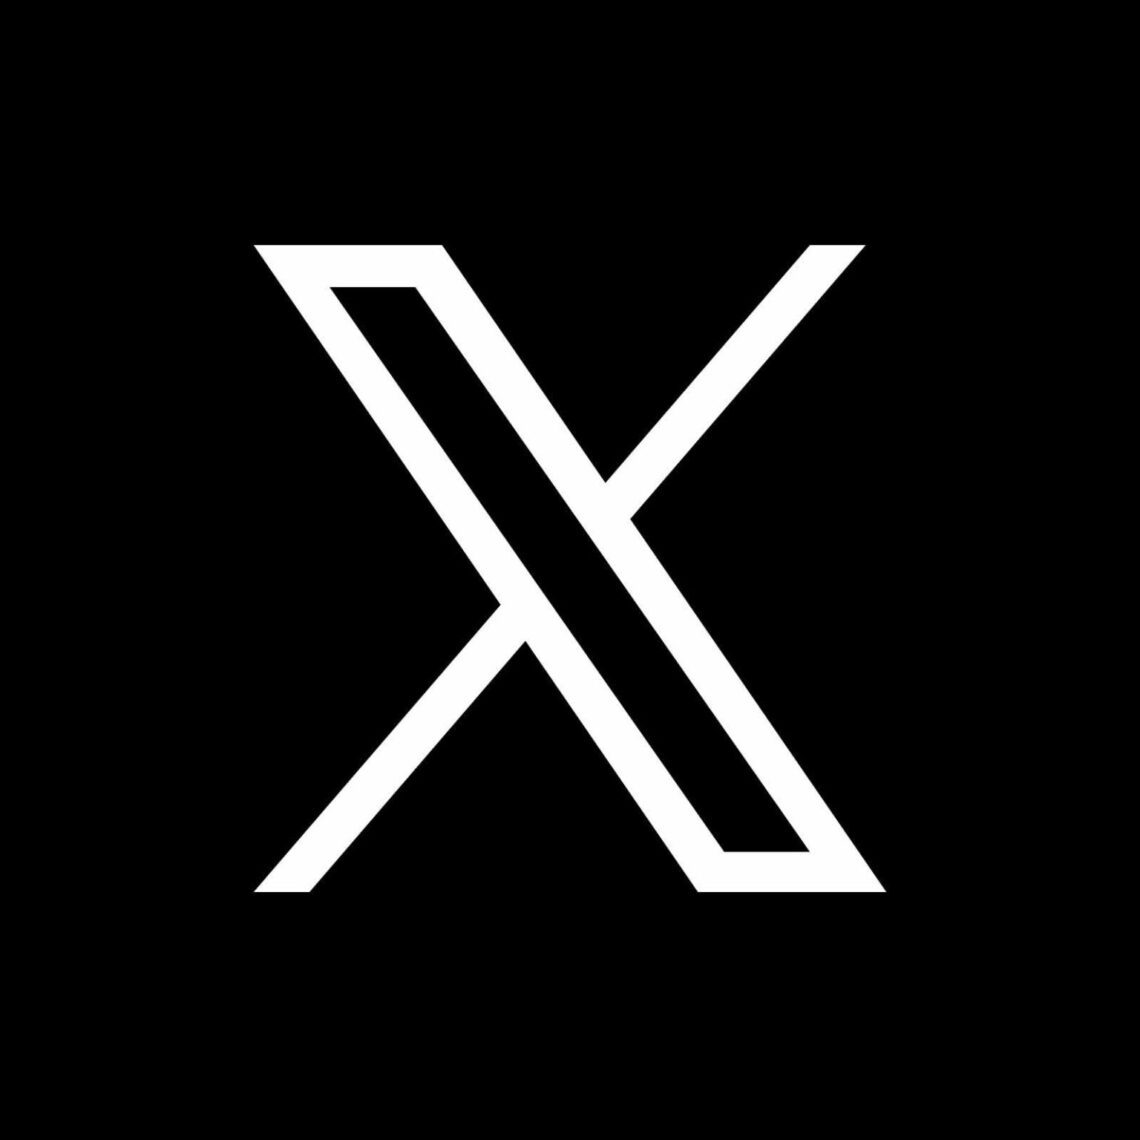 x app logo 1 1536x1536 1